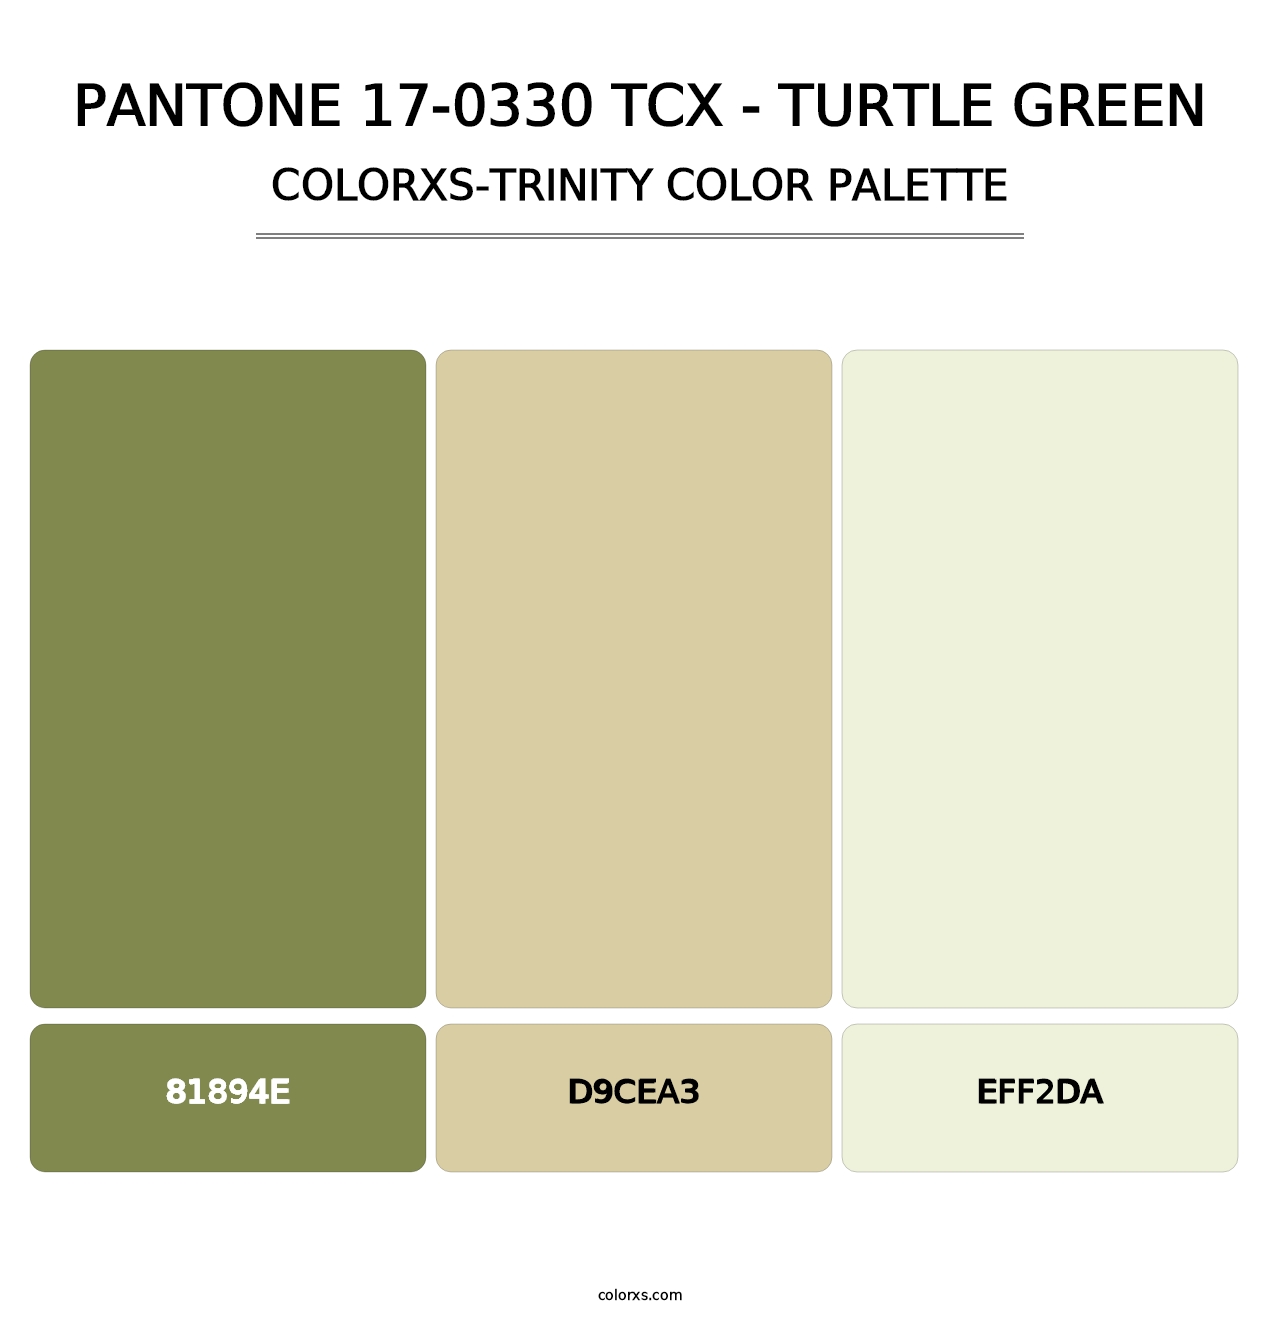 PANTONE 17-0330 TCX - Turtle Green - Colorxs Trinity Palette